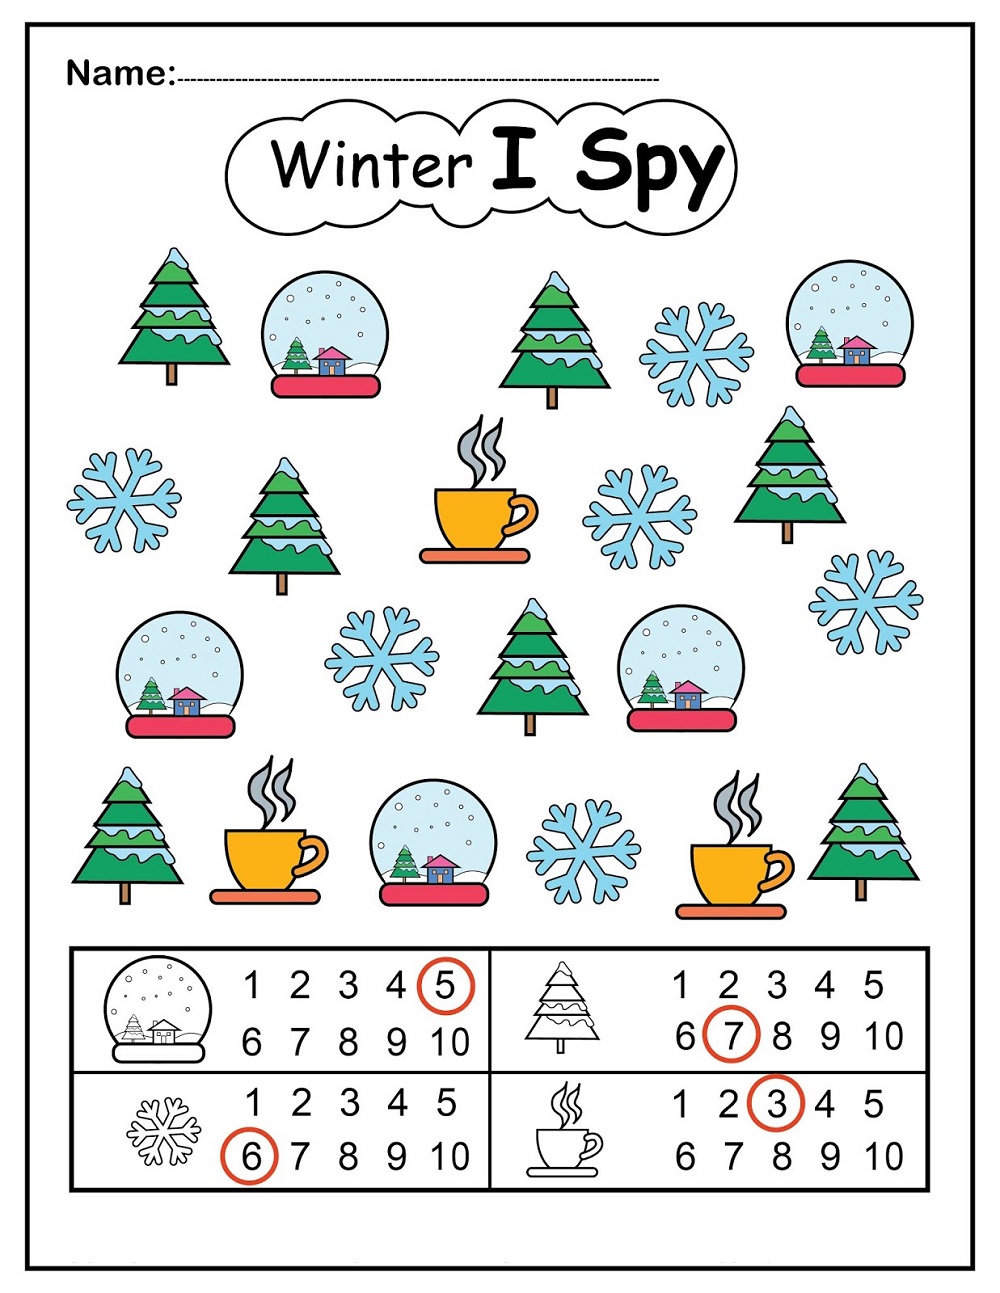 Printable Winter I Spy Game